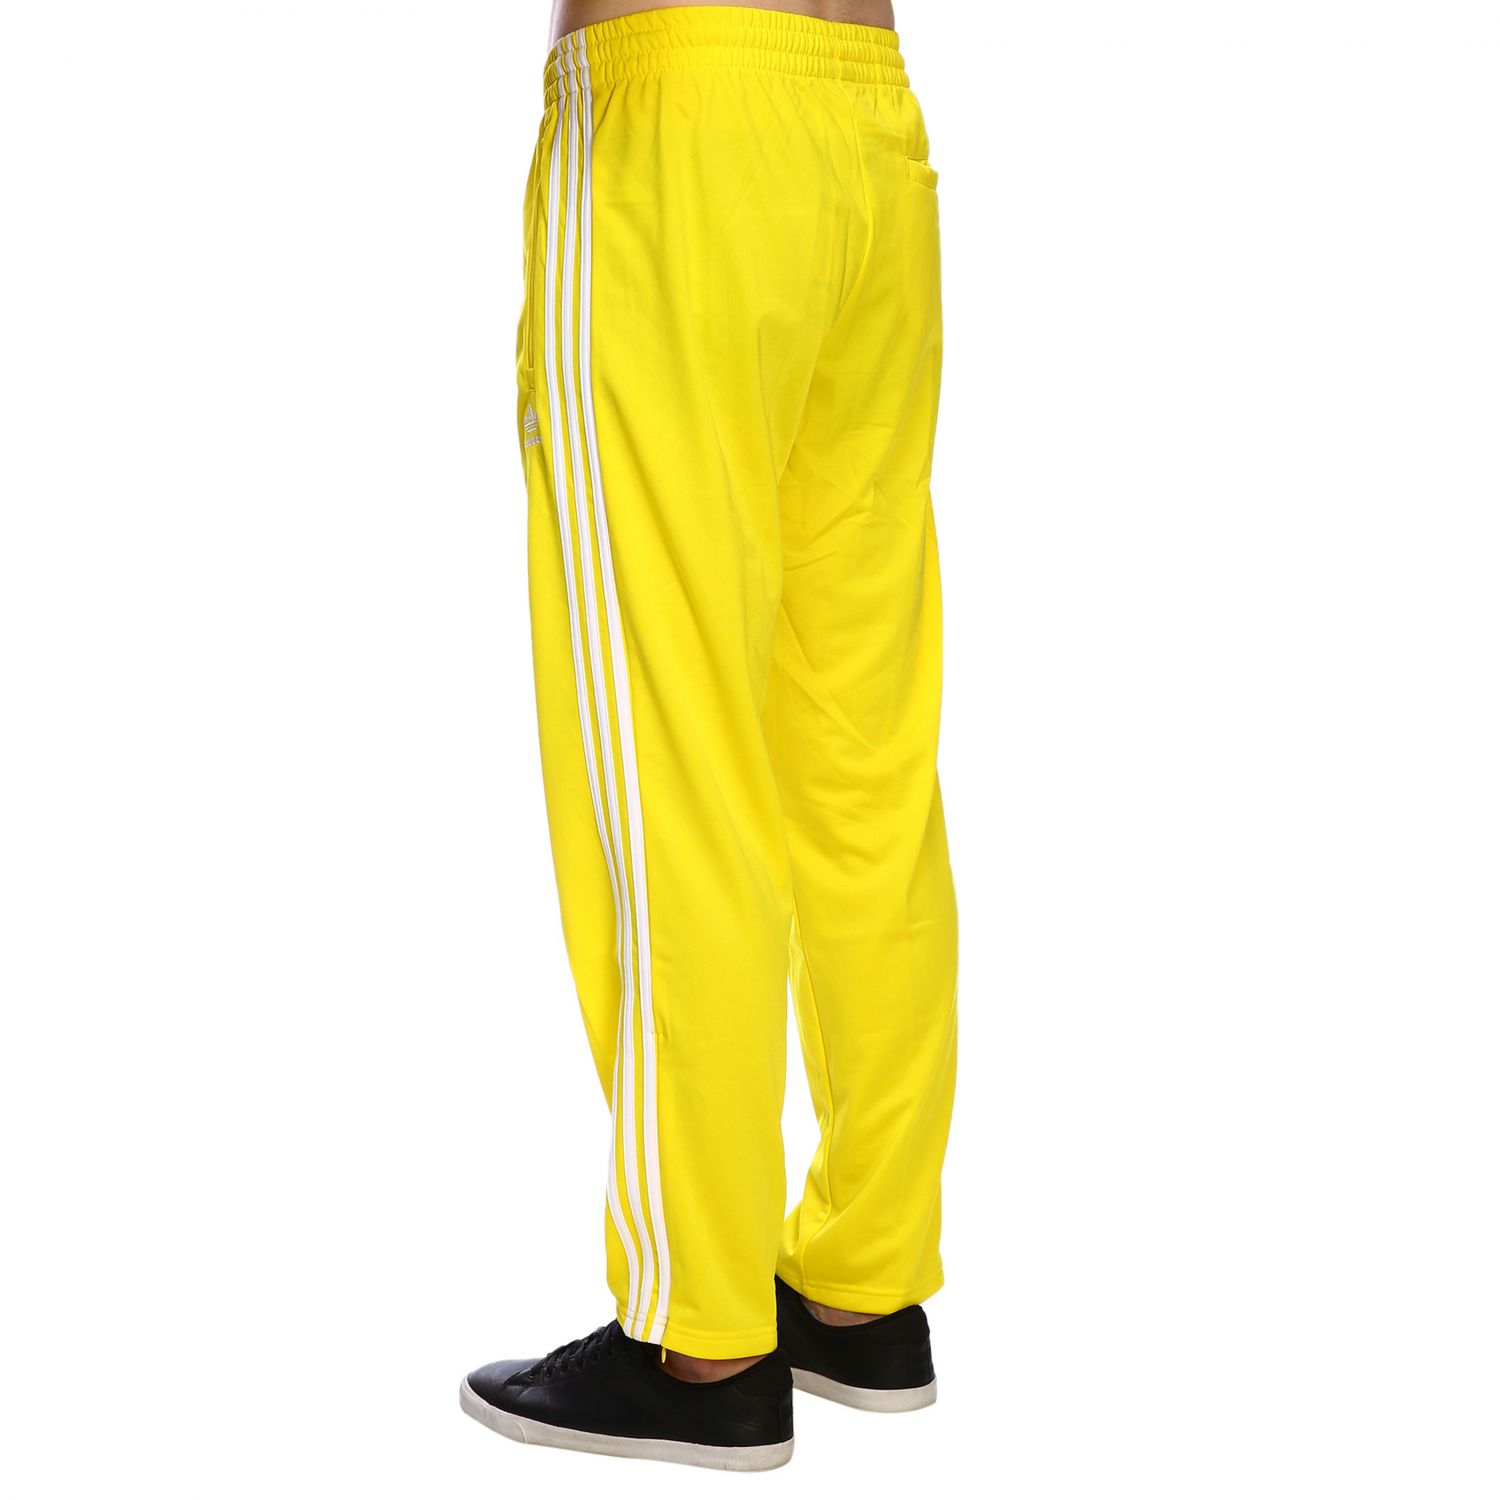 dilema mero Decir a un lado Outlet de Adidas Originals: Pantalón para hombre, Amarillo | PantalÓN Adidas  Originals ED7014 en línea en GIGLIO.COM